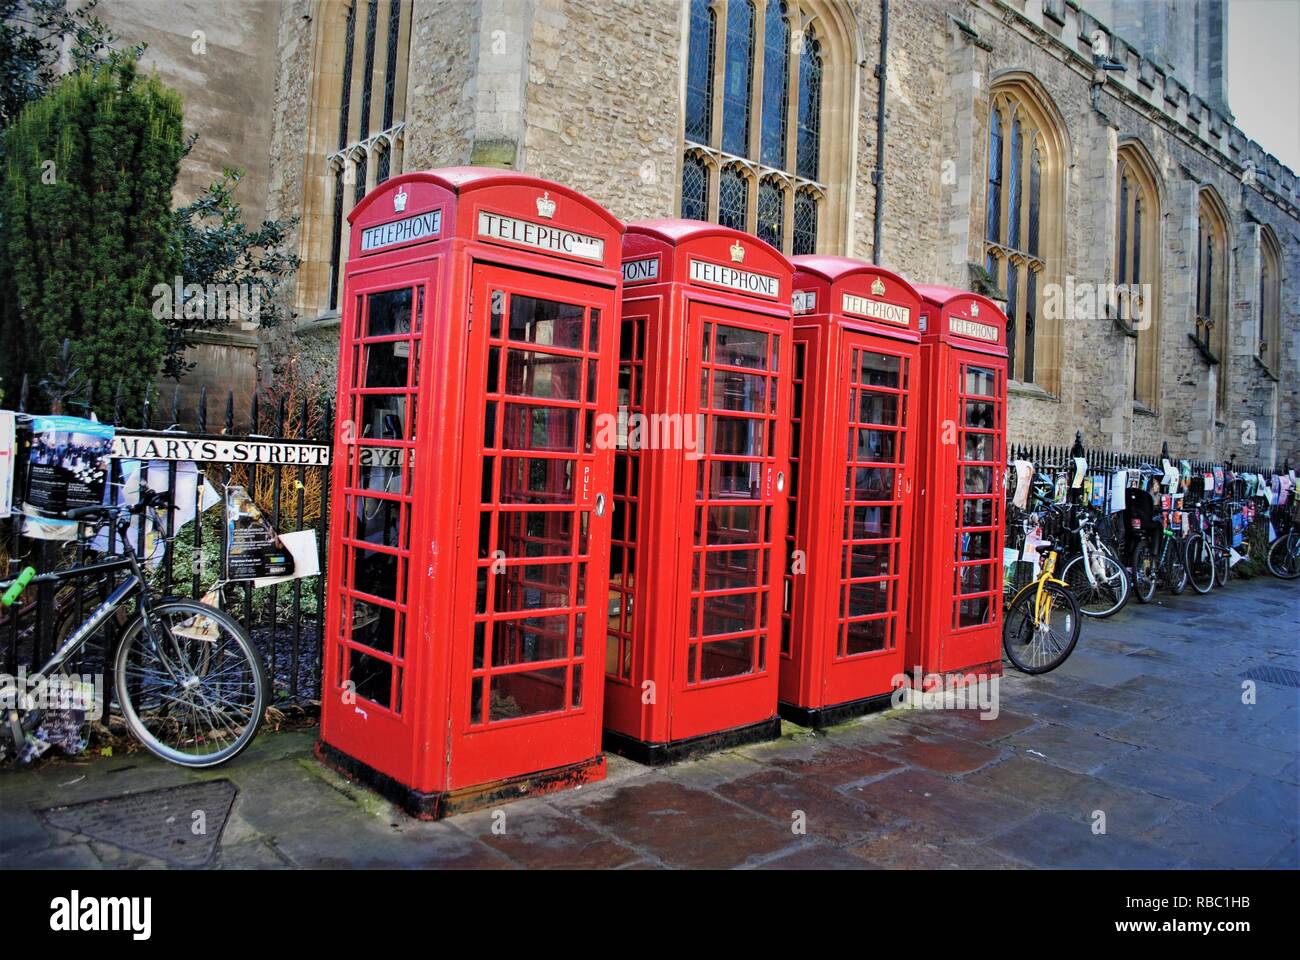 4 British red telephone e boxes outside a church in Cambridge city centre Stock Photo